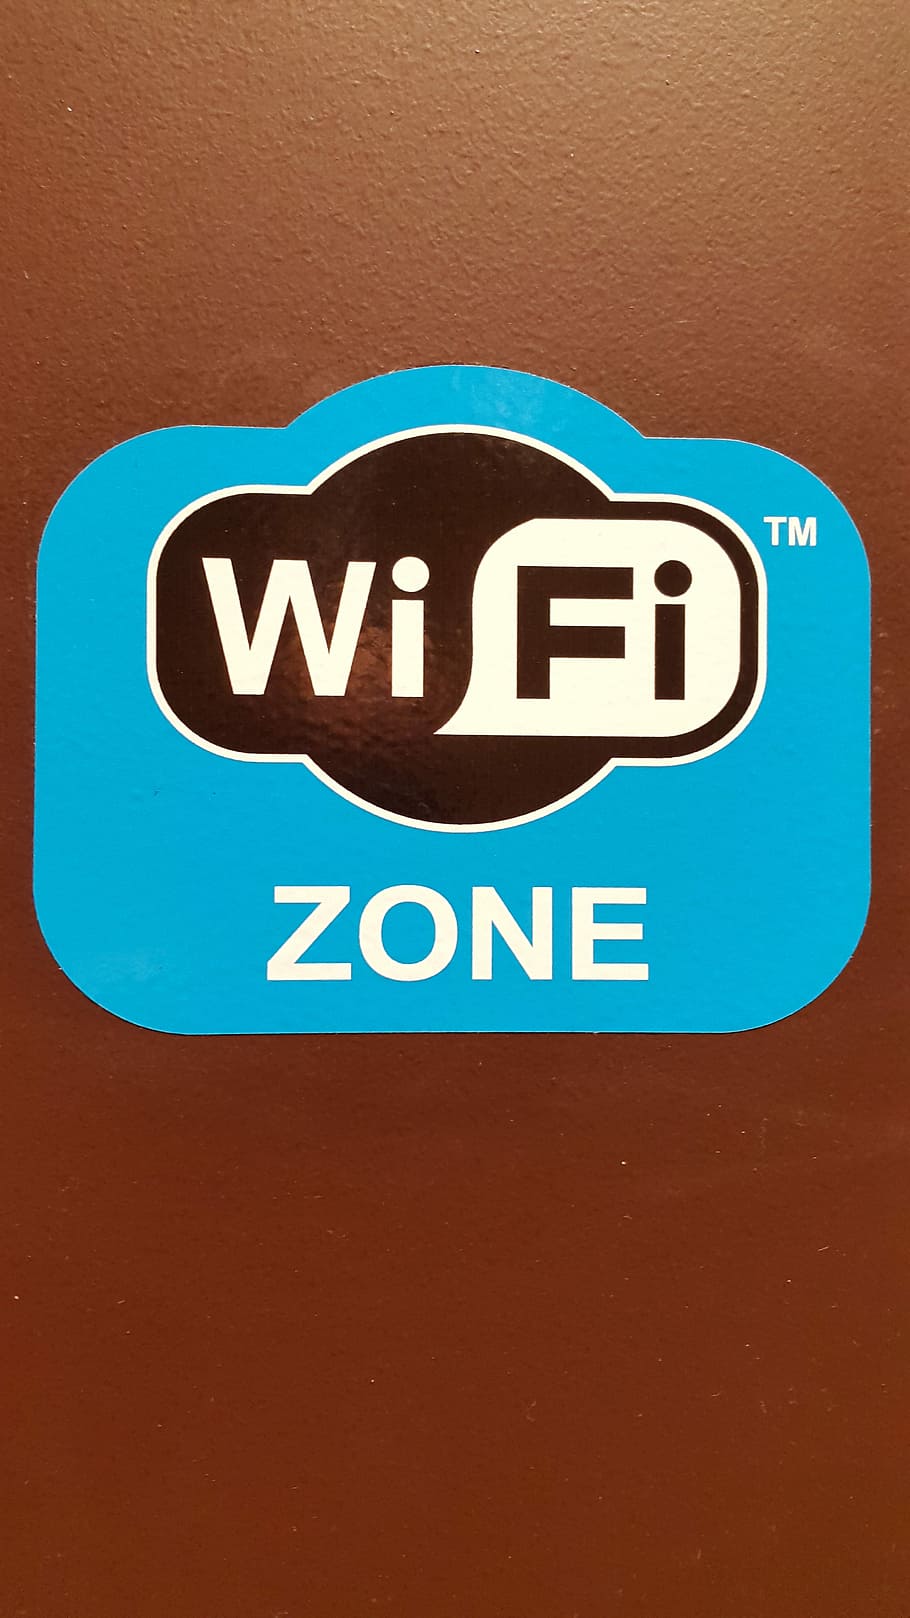 wifi zone logo, grafik, Wifi, Zone, Shield, Note, Surfing, tanda jalan, papan, arah